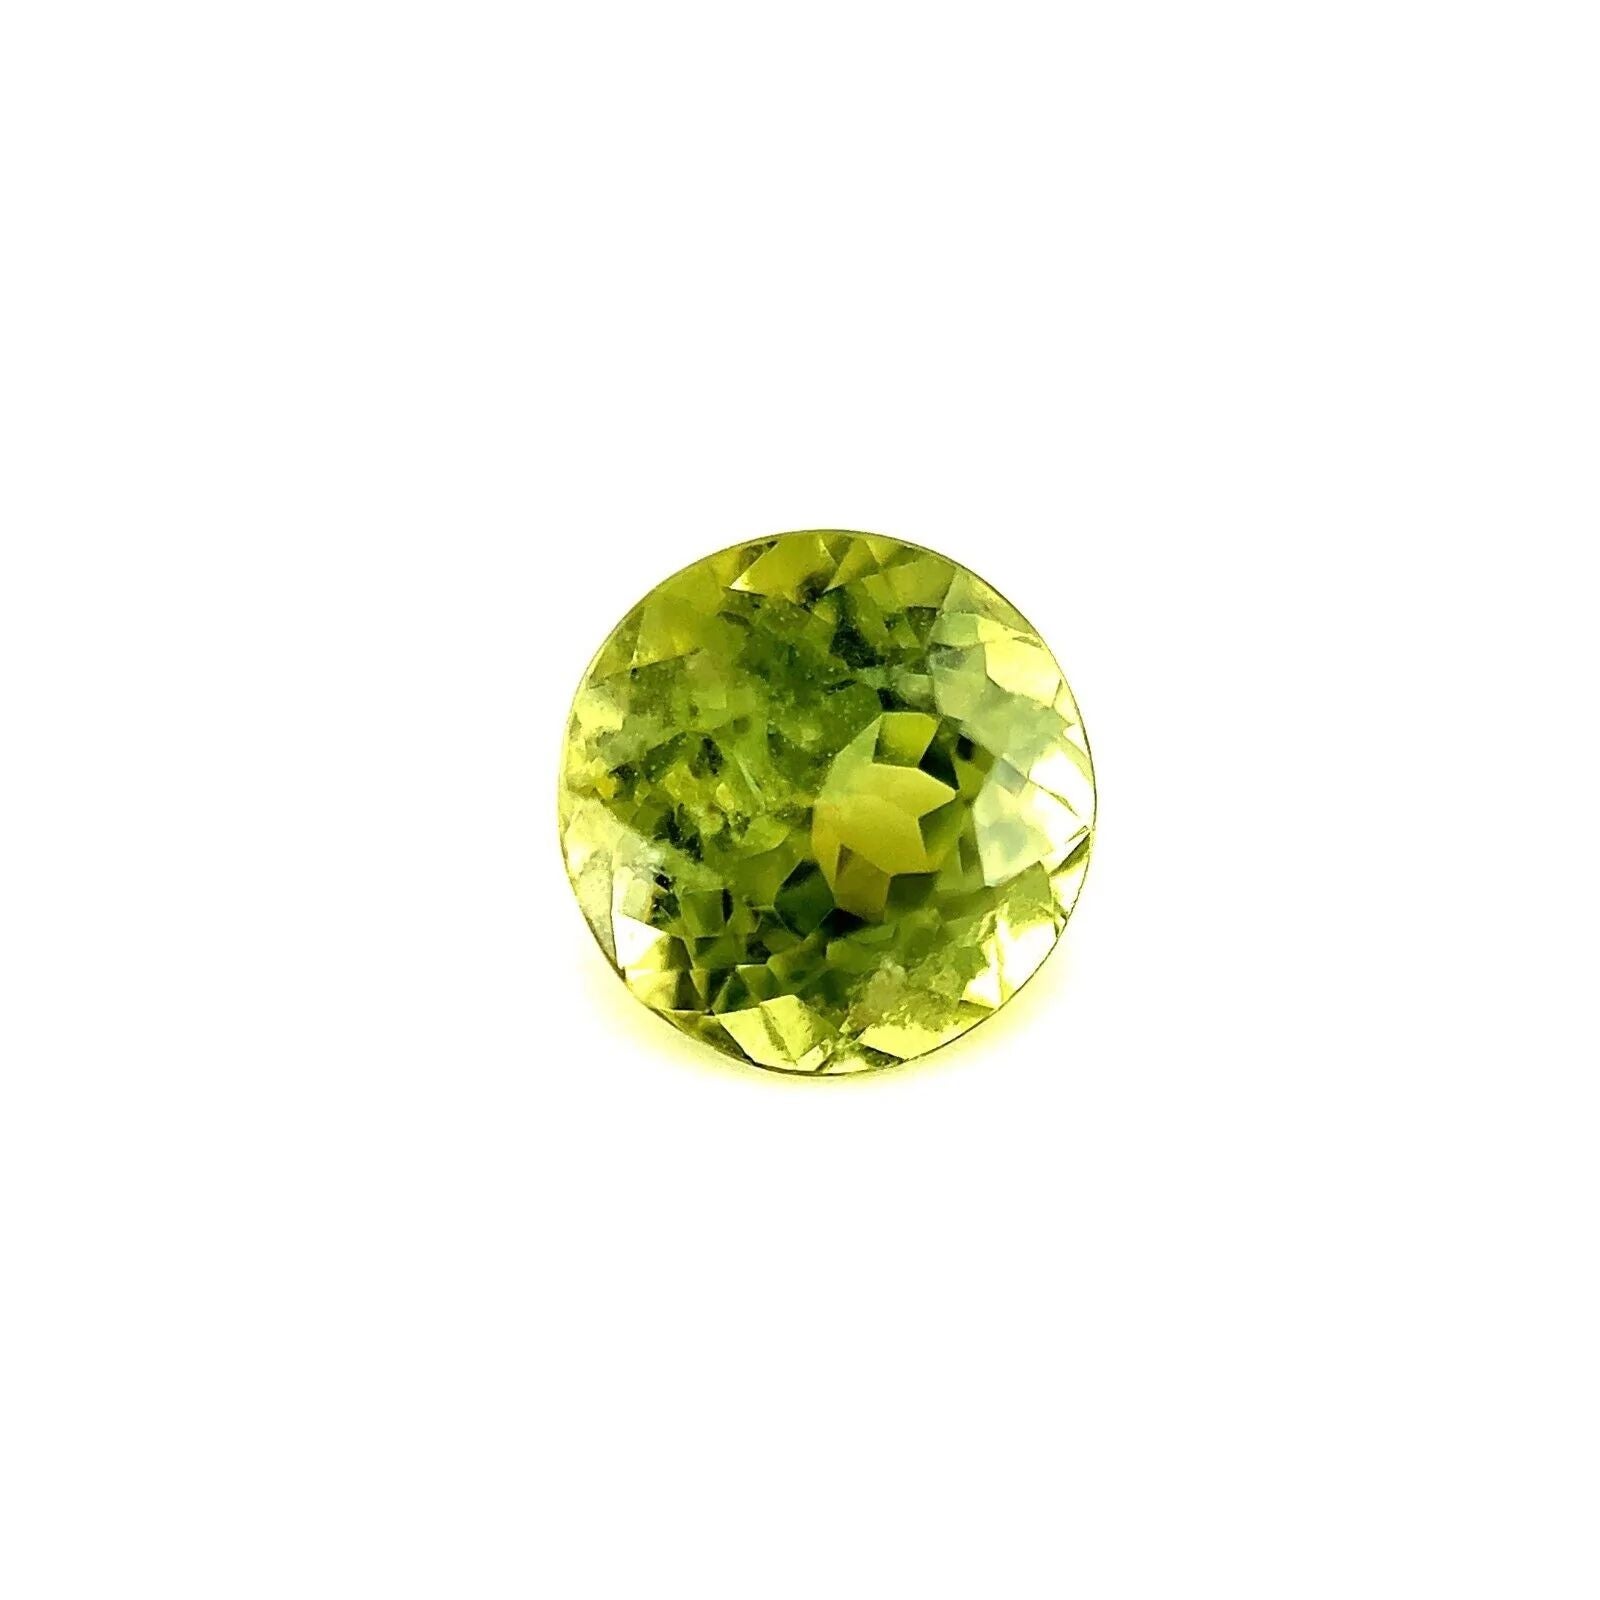 Vivid Yellow Green Sapphire 1.58ct Round Brilliant Cut Loose Gemstone